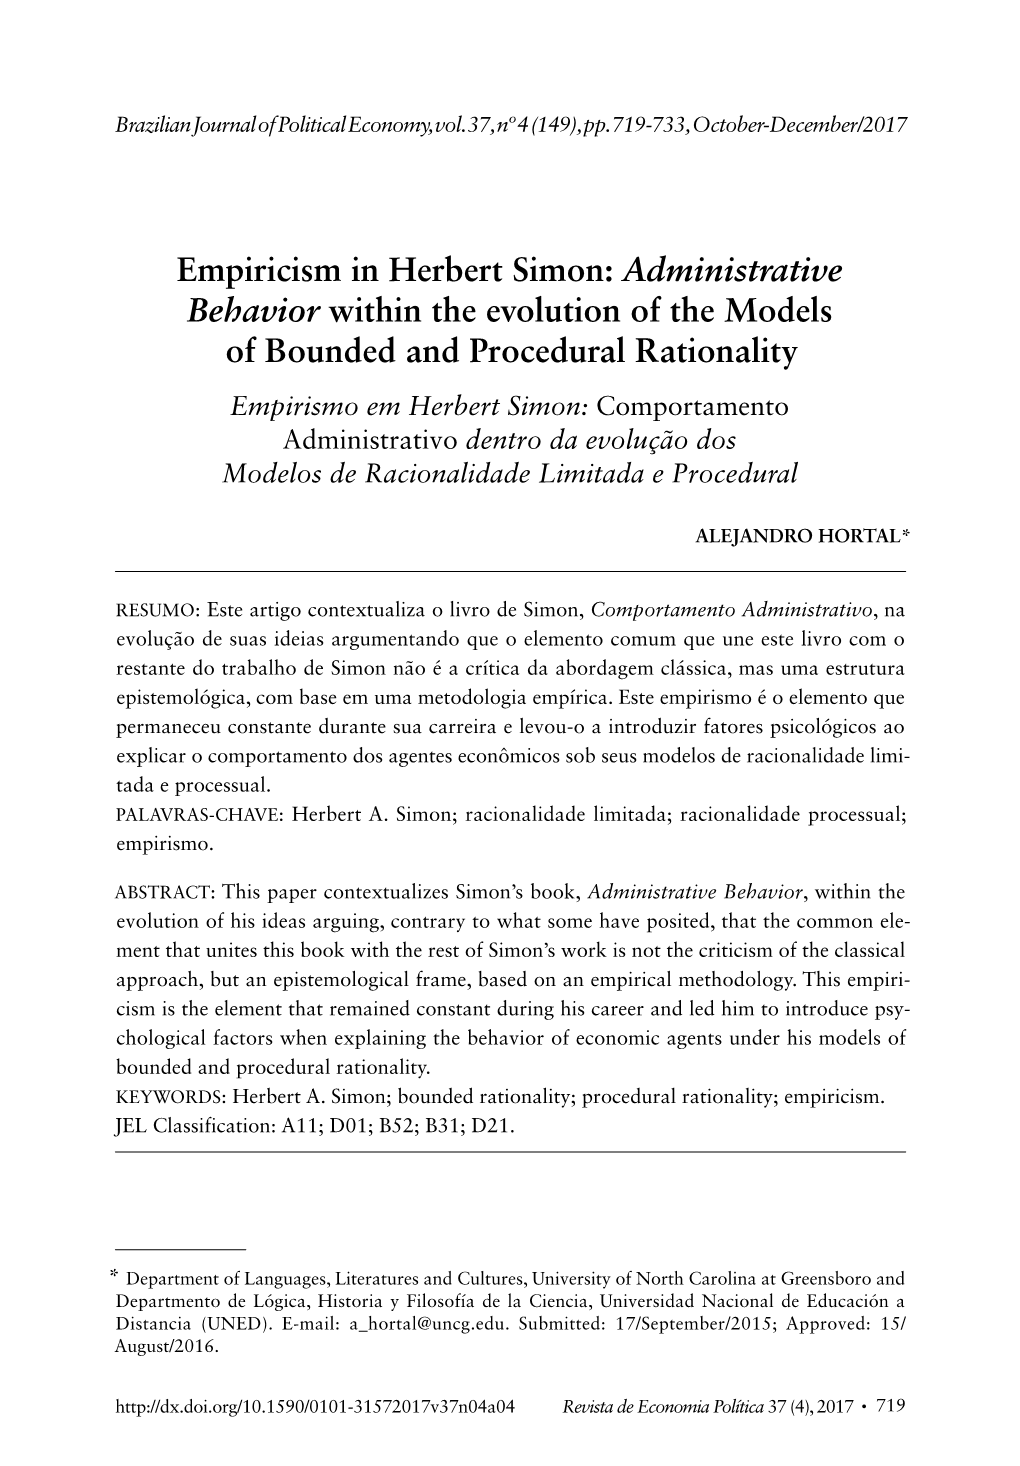 Empiricism in Herbert Simon: Administrative Behavior Within The